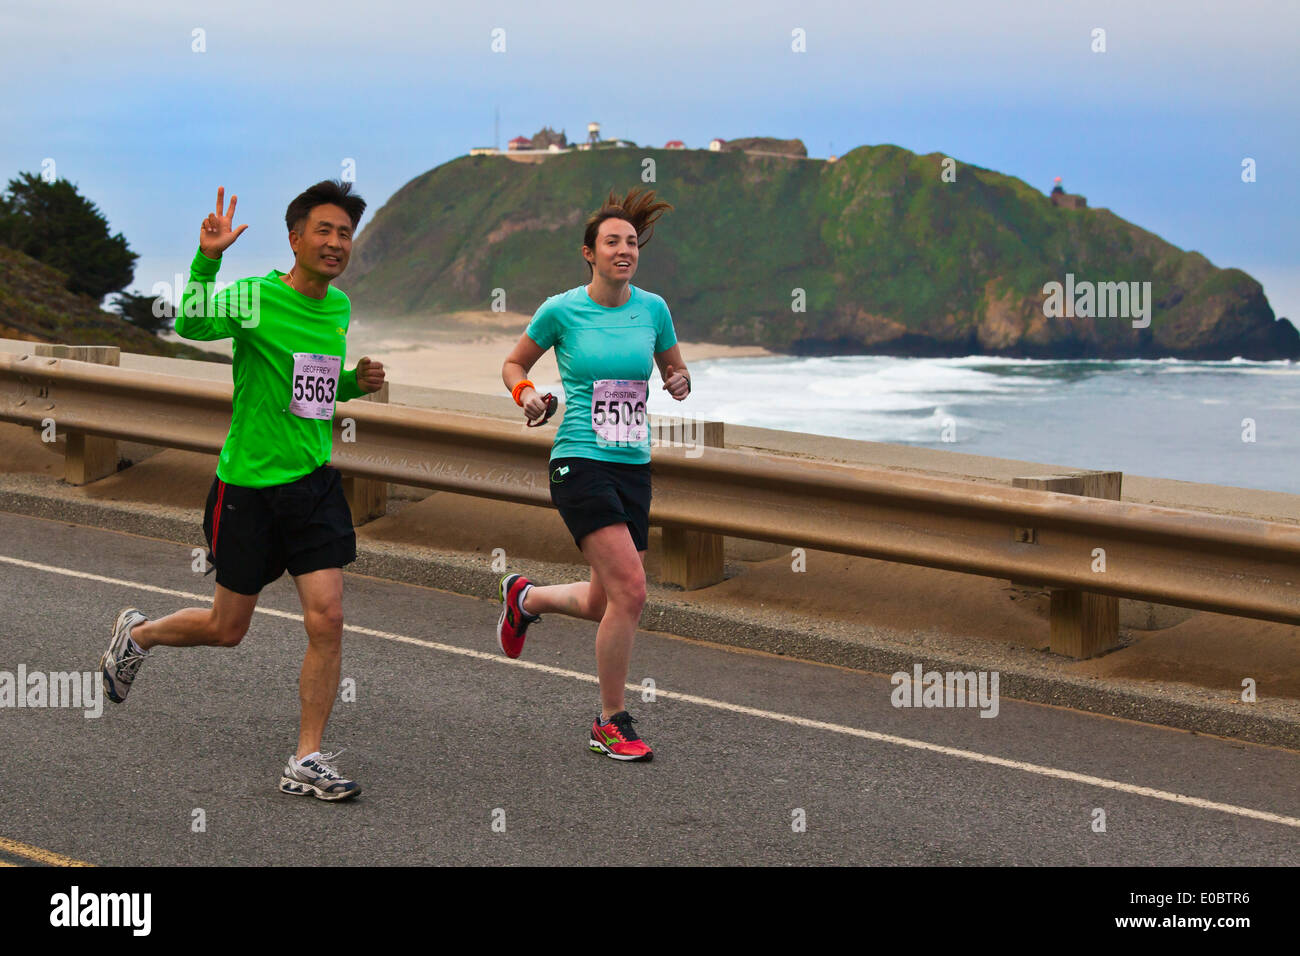 Corredor De Maratones Fotos e Imágenes de stock - Alamy